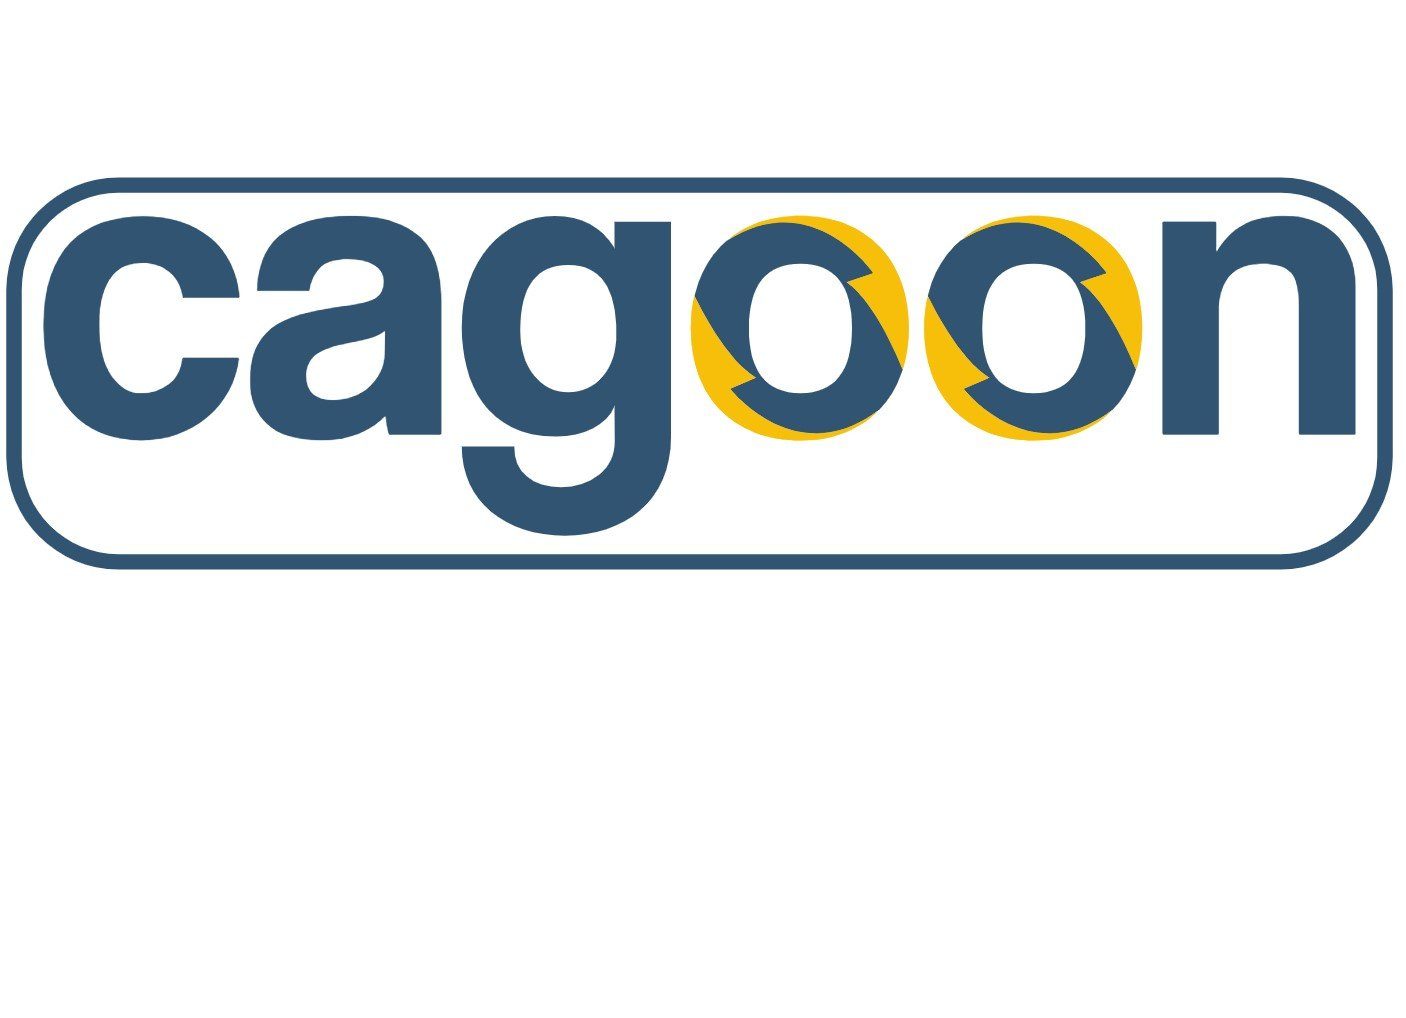 cagoon